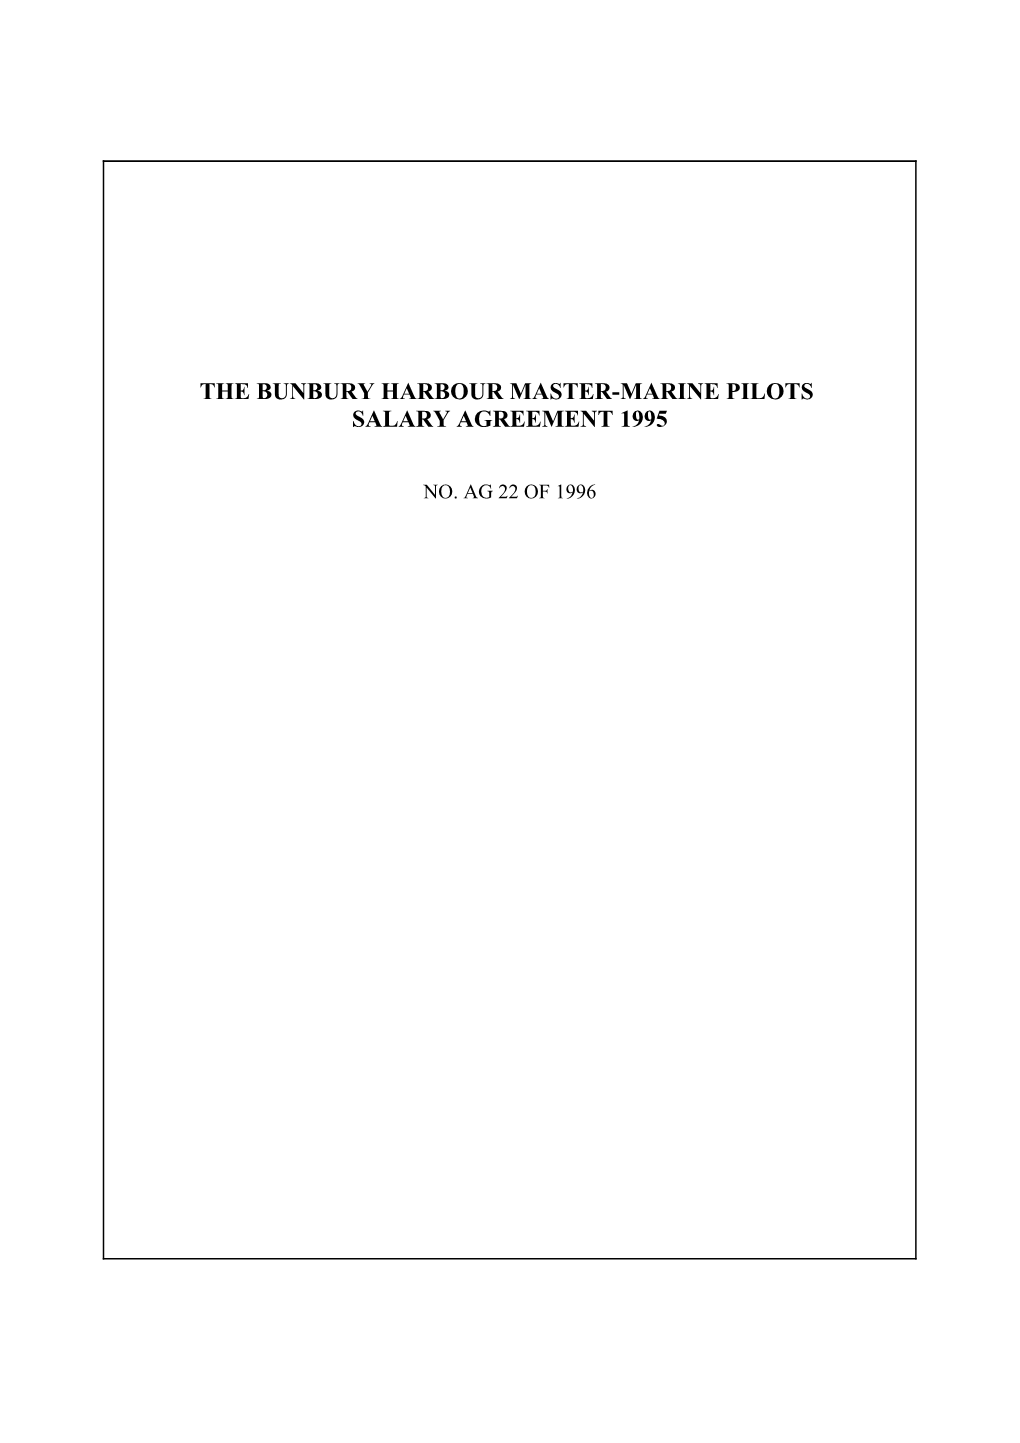 Bunbury Harbour Master-Marine Pilots Salary Agreement 1995, The